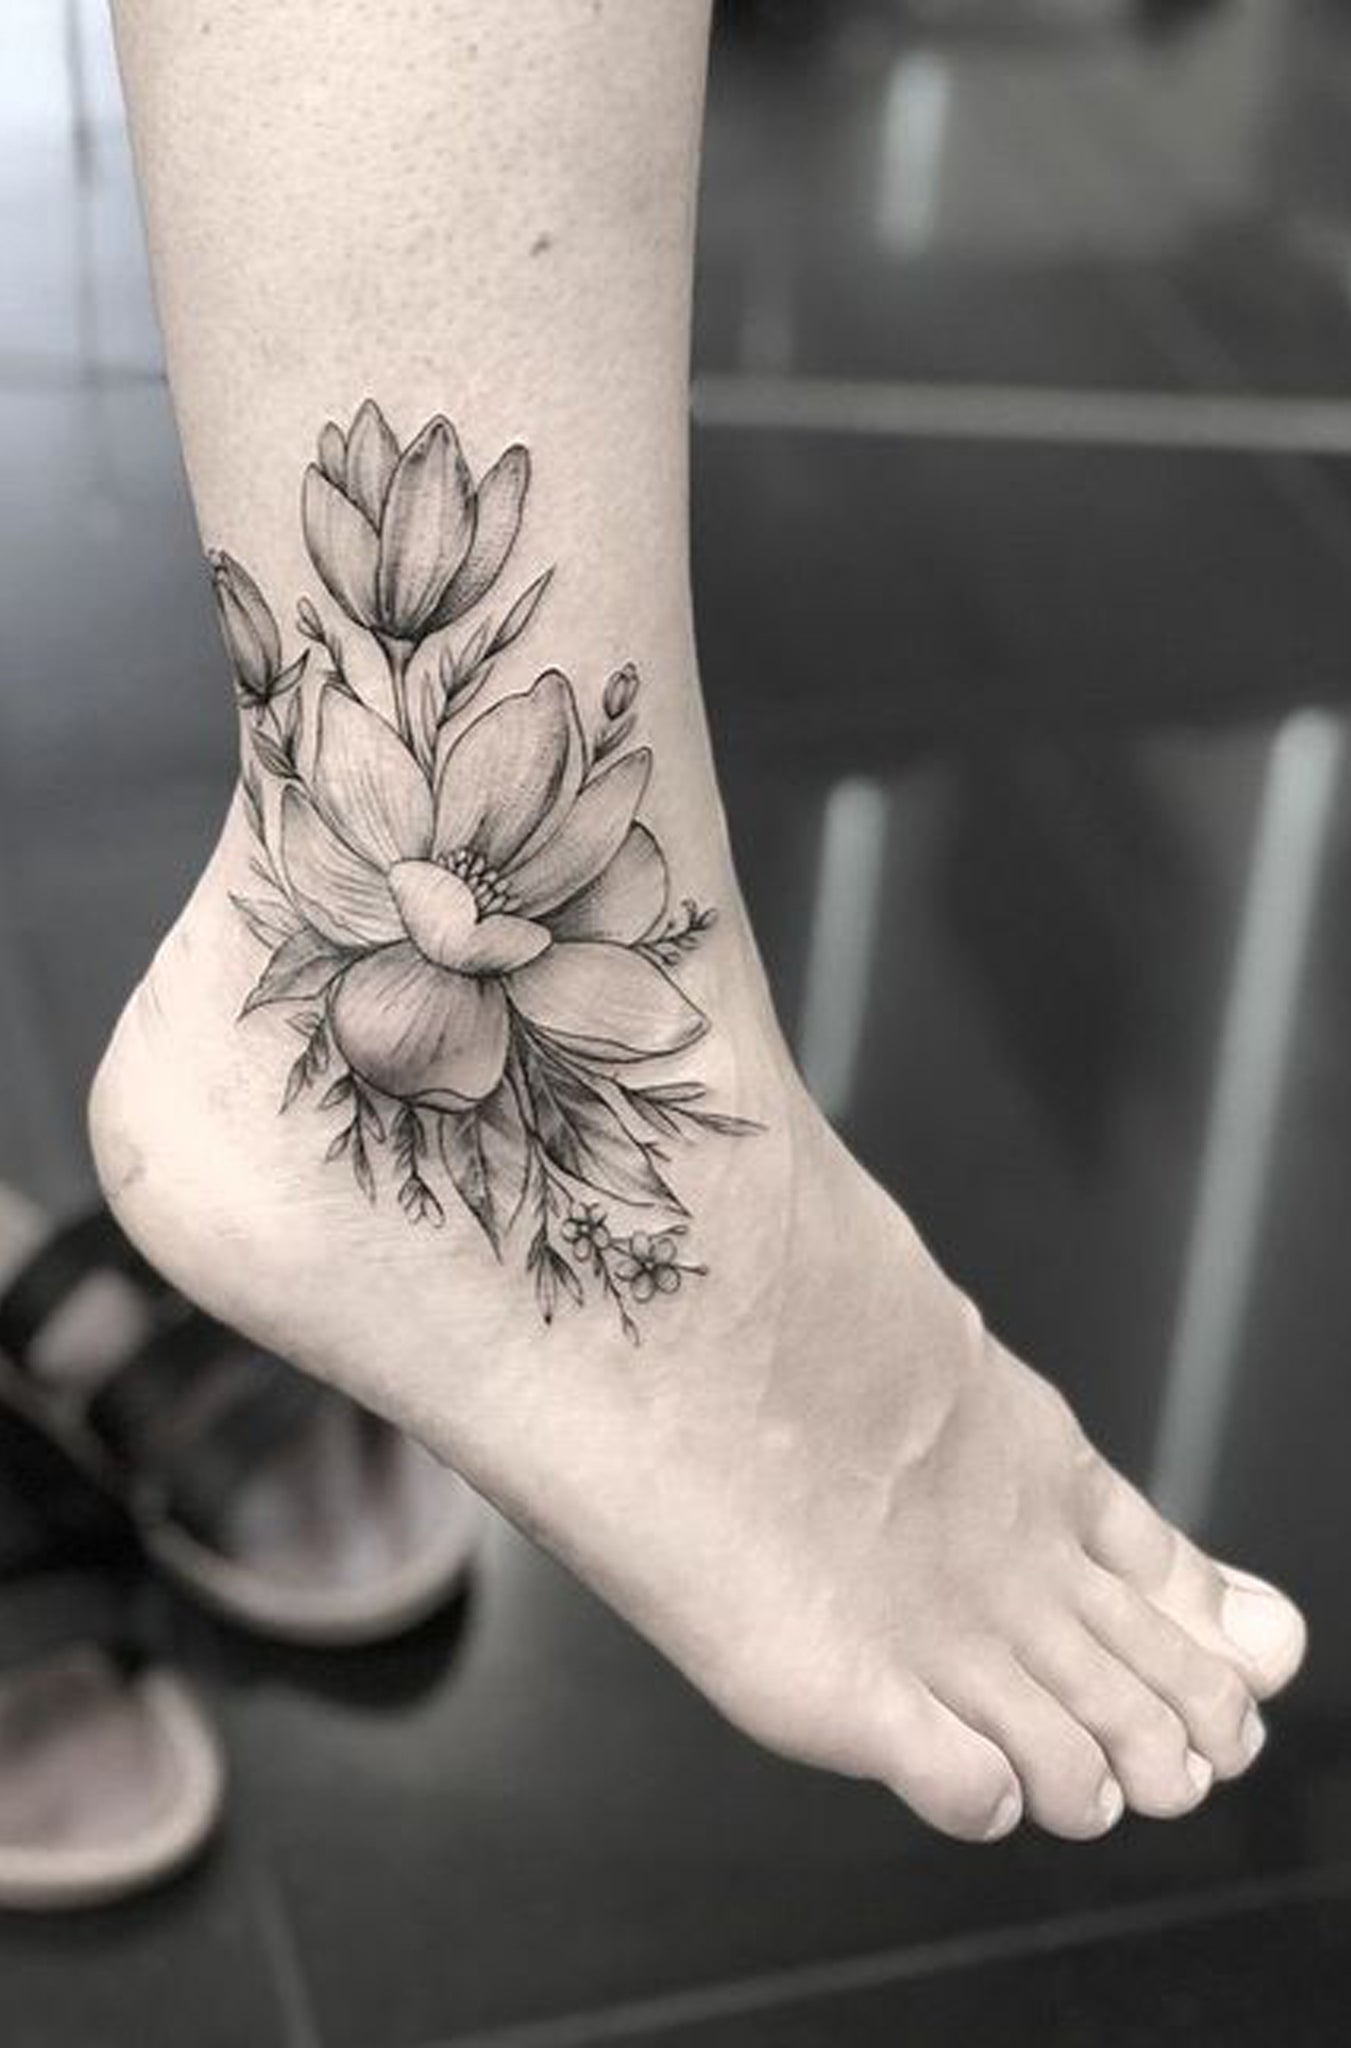 Vintage Wild Flower Foot Tattoo Ideas for Women - Beautiful Delicate Tat - www.MyBodiArt.com #tattoos